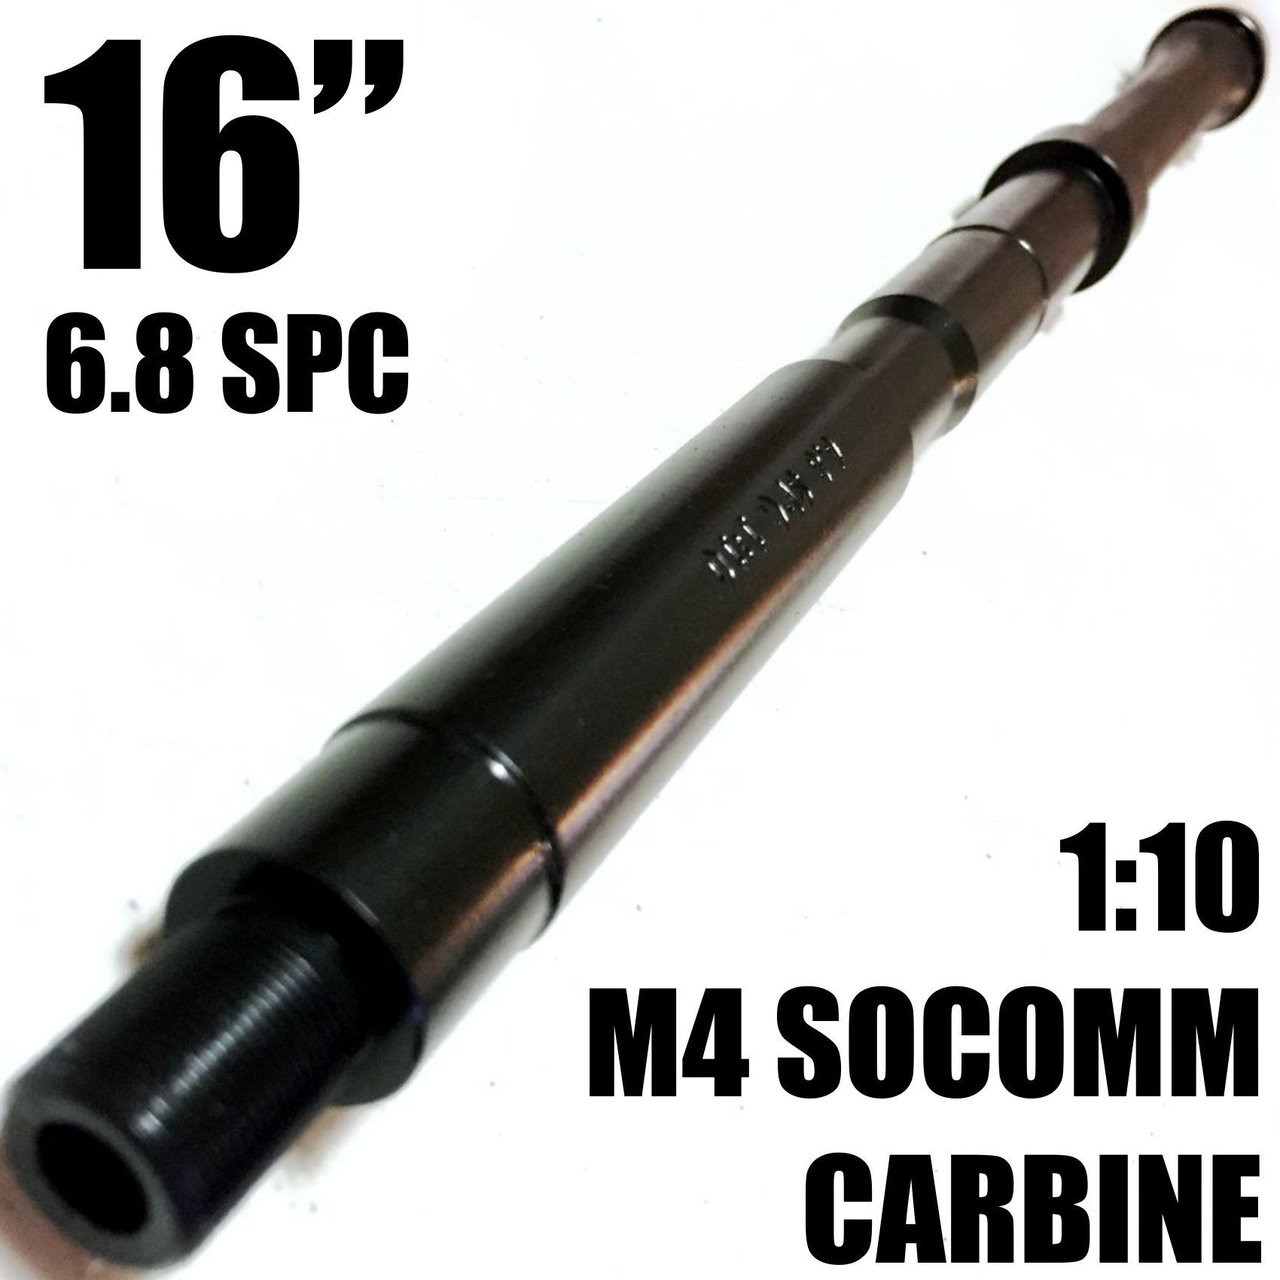 16" 6.8 SPC II AR Barrel, M4 SOCOMM Profile 1:10 | NITRIDE